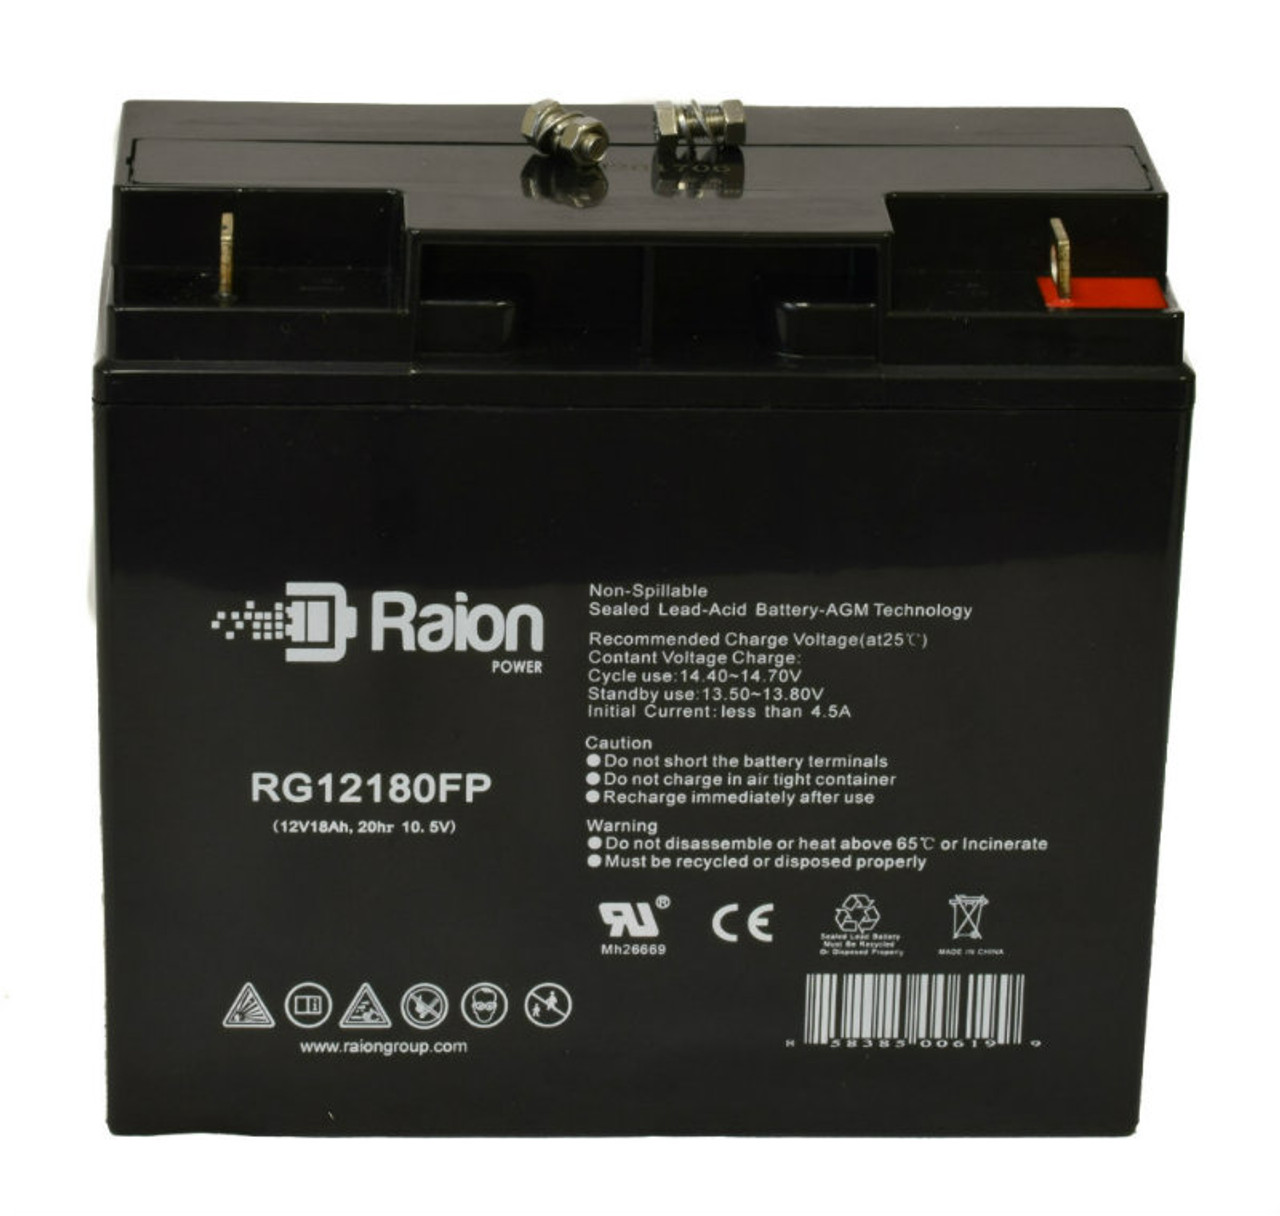 Raion Power RG12180FP 12V 18Ah Lead Acid Battery for Black & Decker Jump Starter PS400JRB Power Station